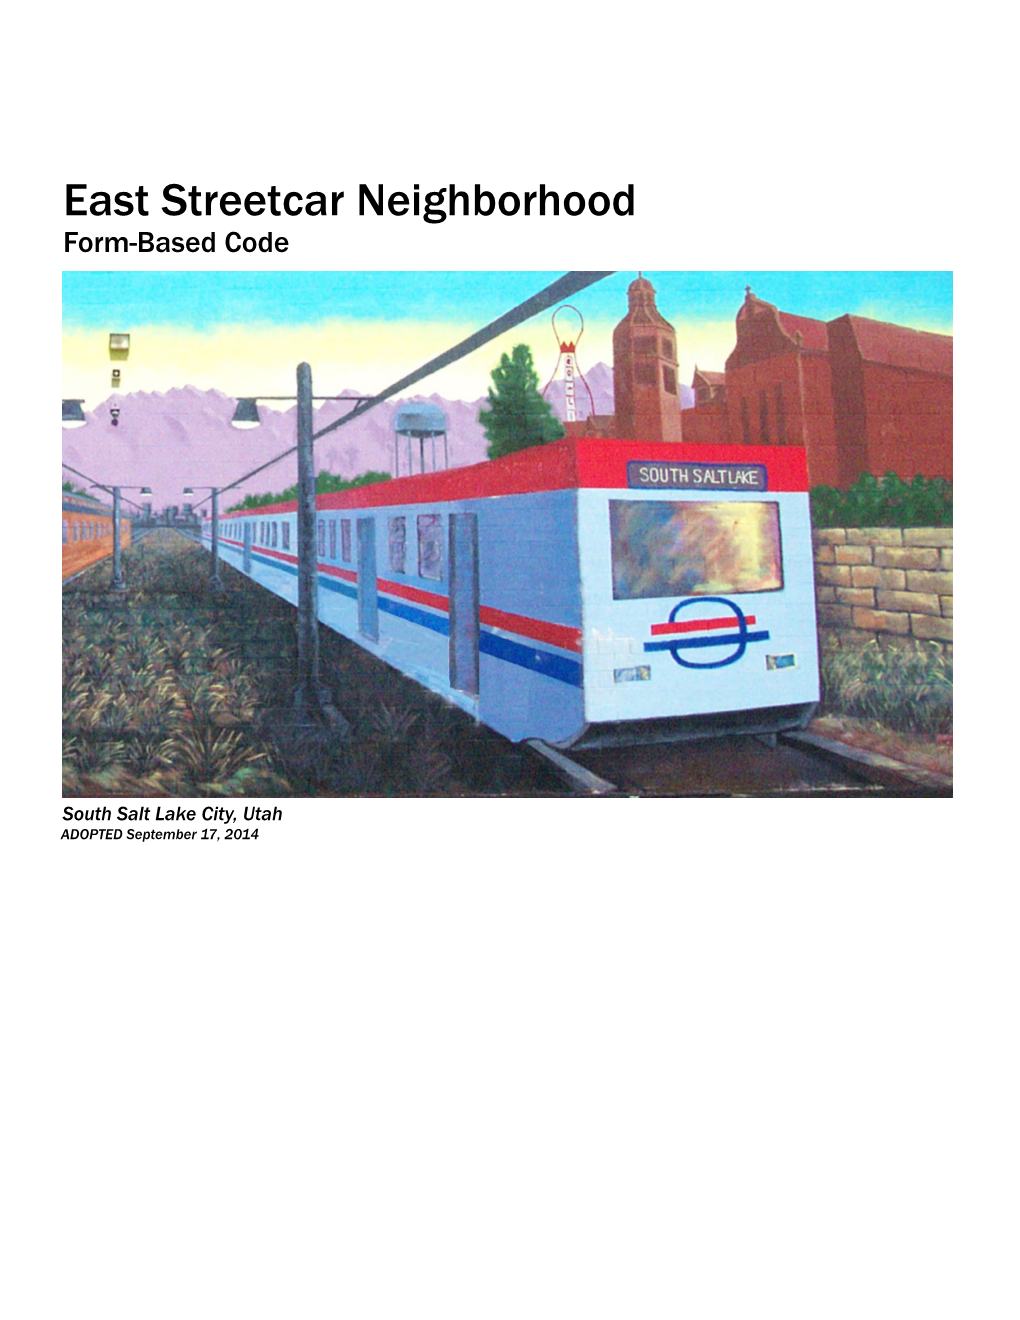 East Streetcar Neighborhood Form-Based Code